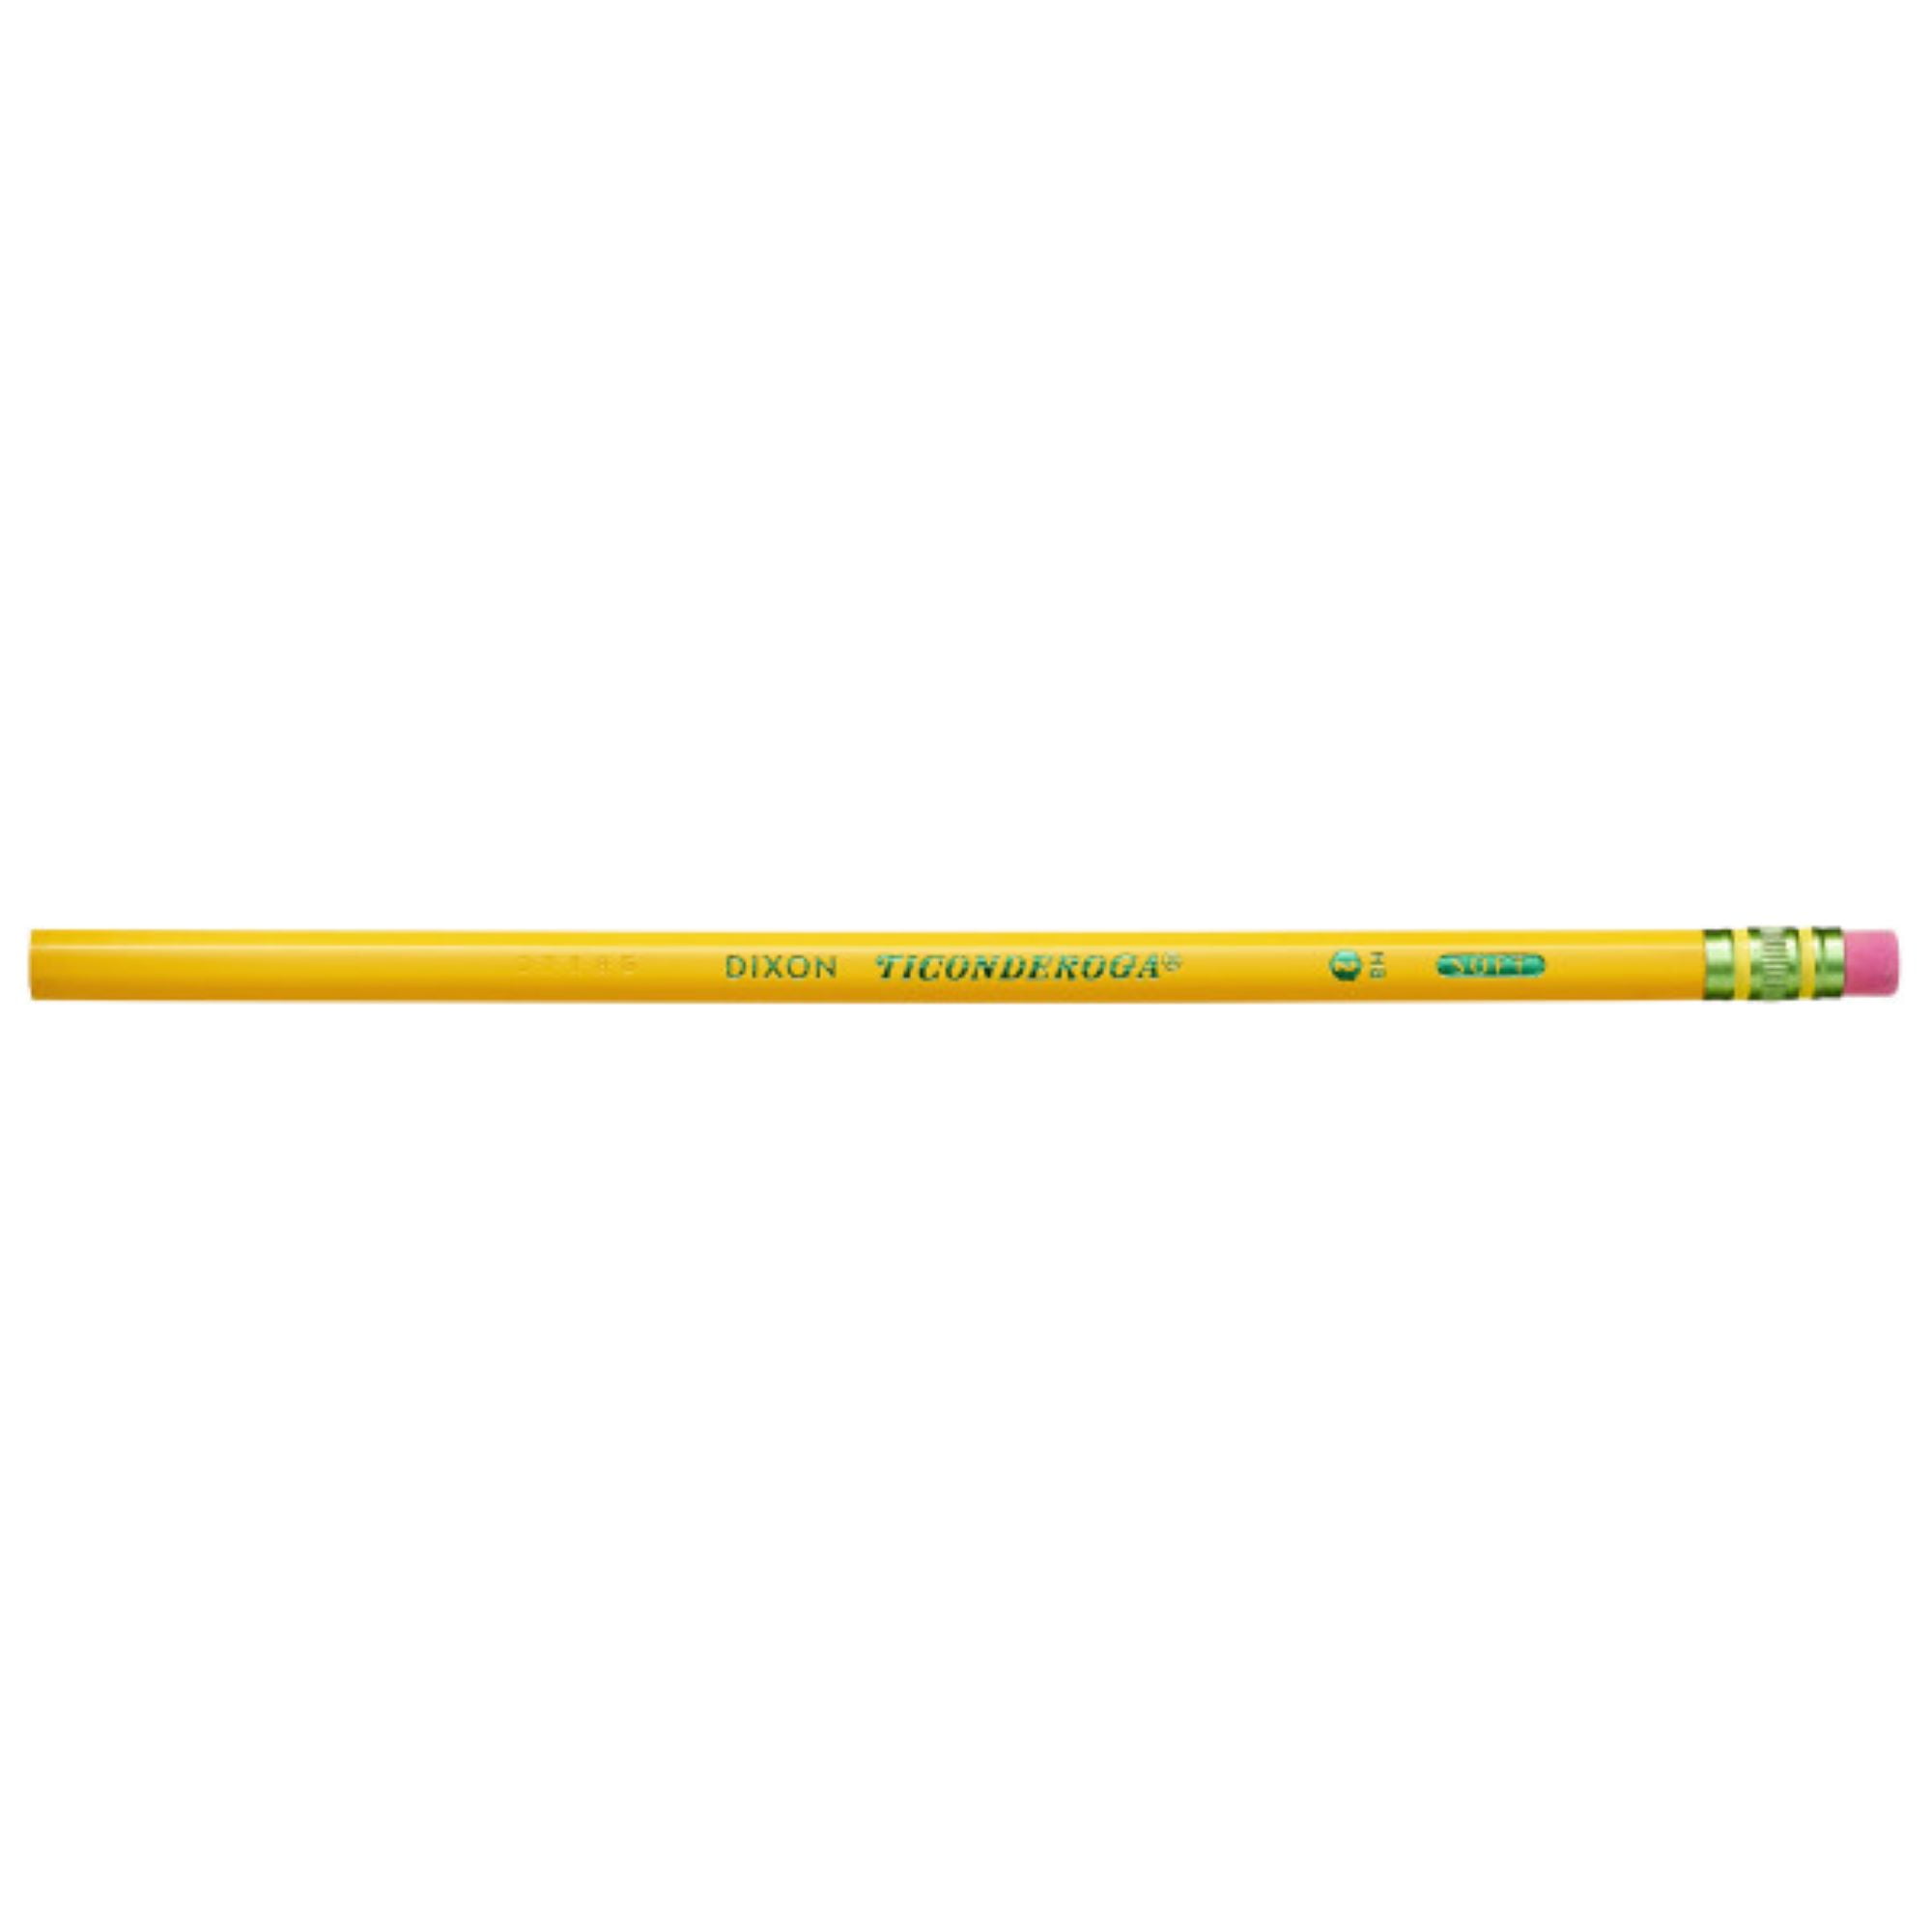 The Magic of a Yellow No. 2 Pencil